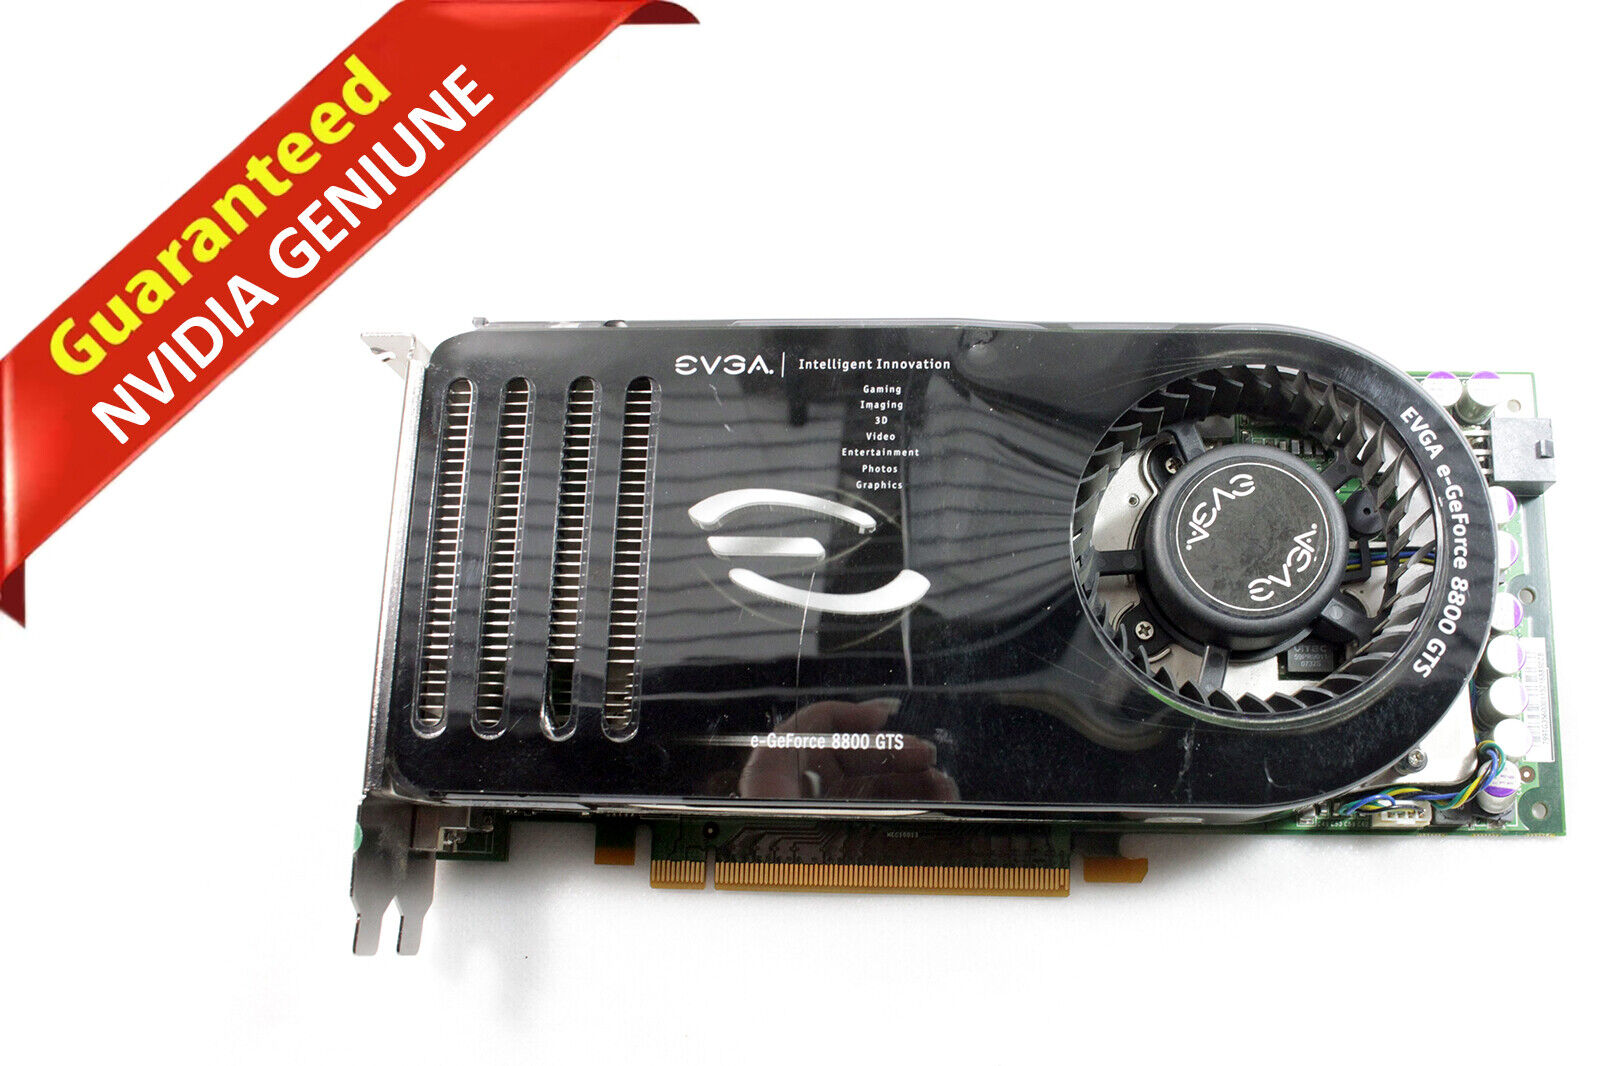 EVGA NVIDIA GeForce 8800 GTS 640-P2-N821-AR 640MB 6-Pin PCI-E GDDR3 Graphic Card